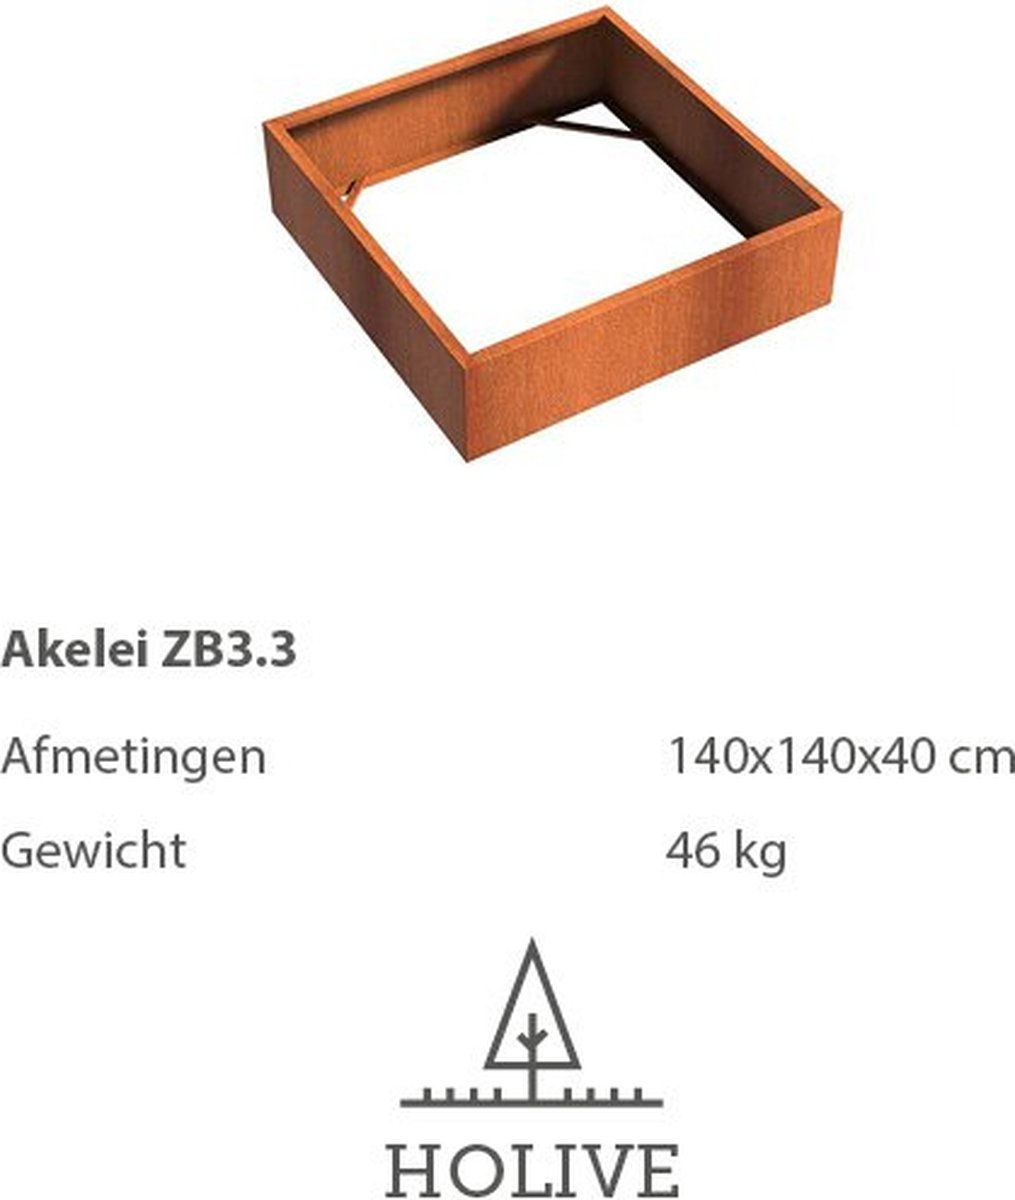 Cortenstaal Akelei ZB3.3 Vierkant zonder bodem 140x140x40 cm. Plantenbak